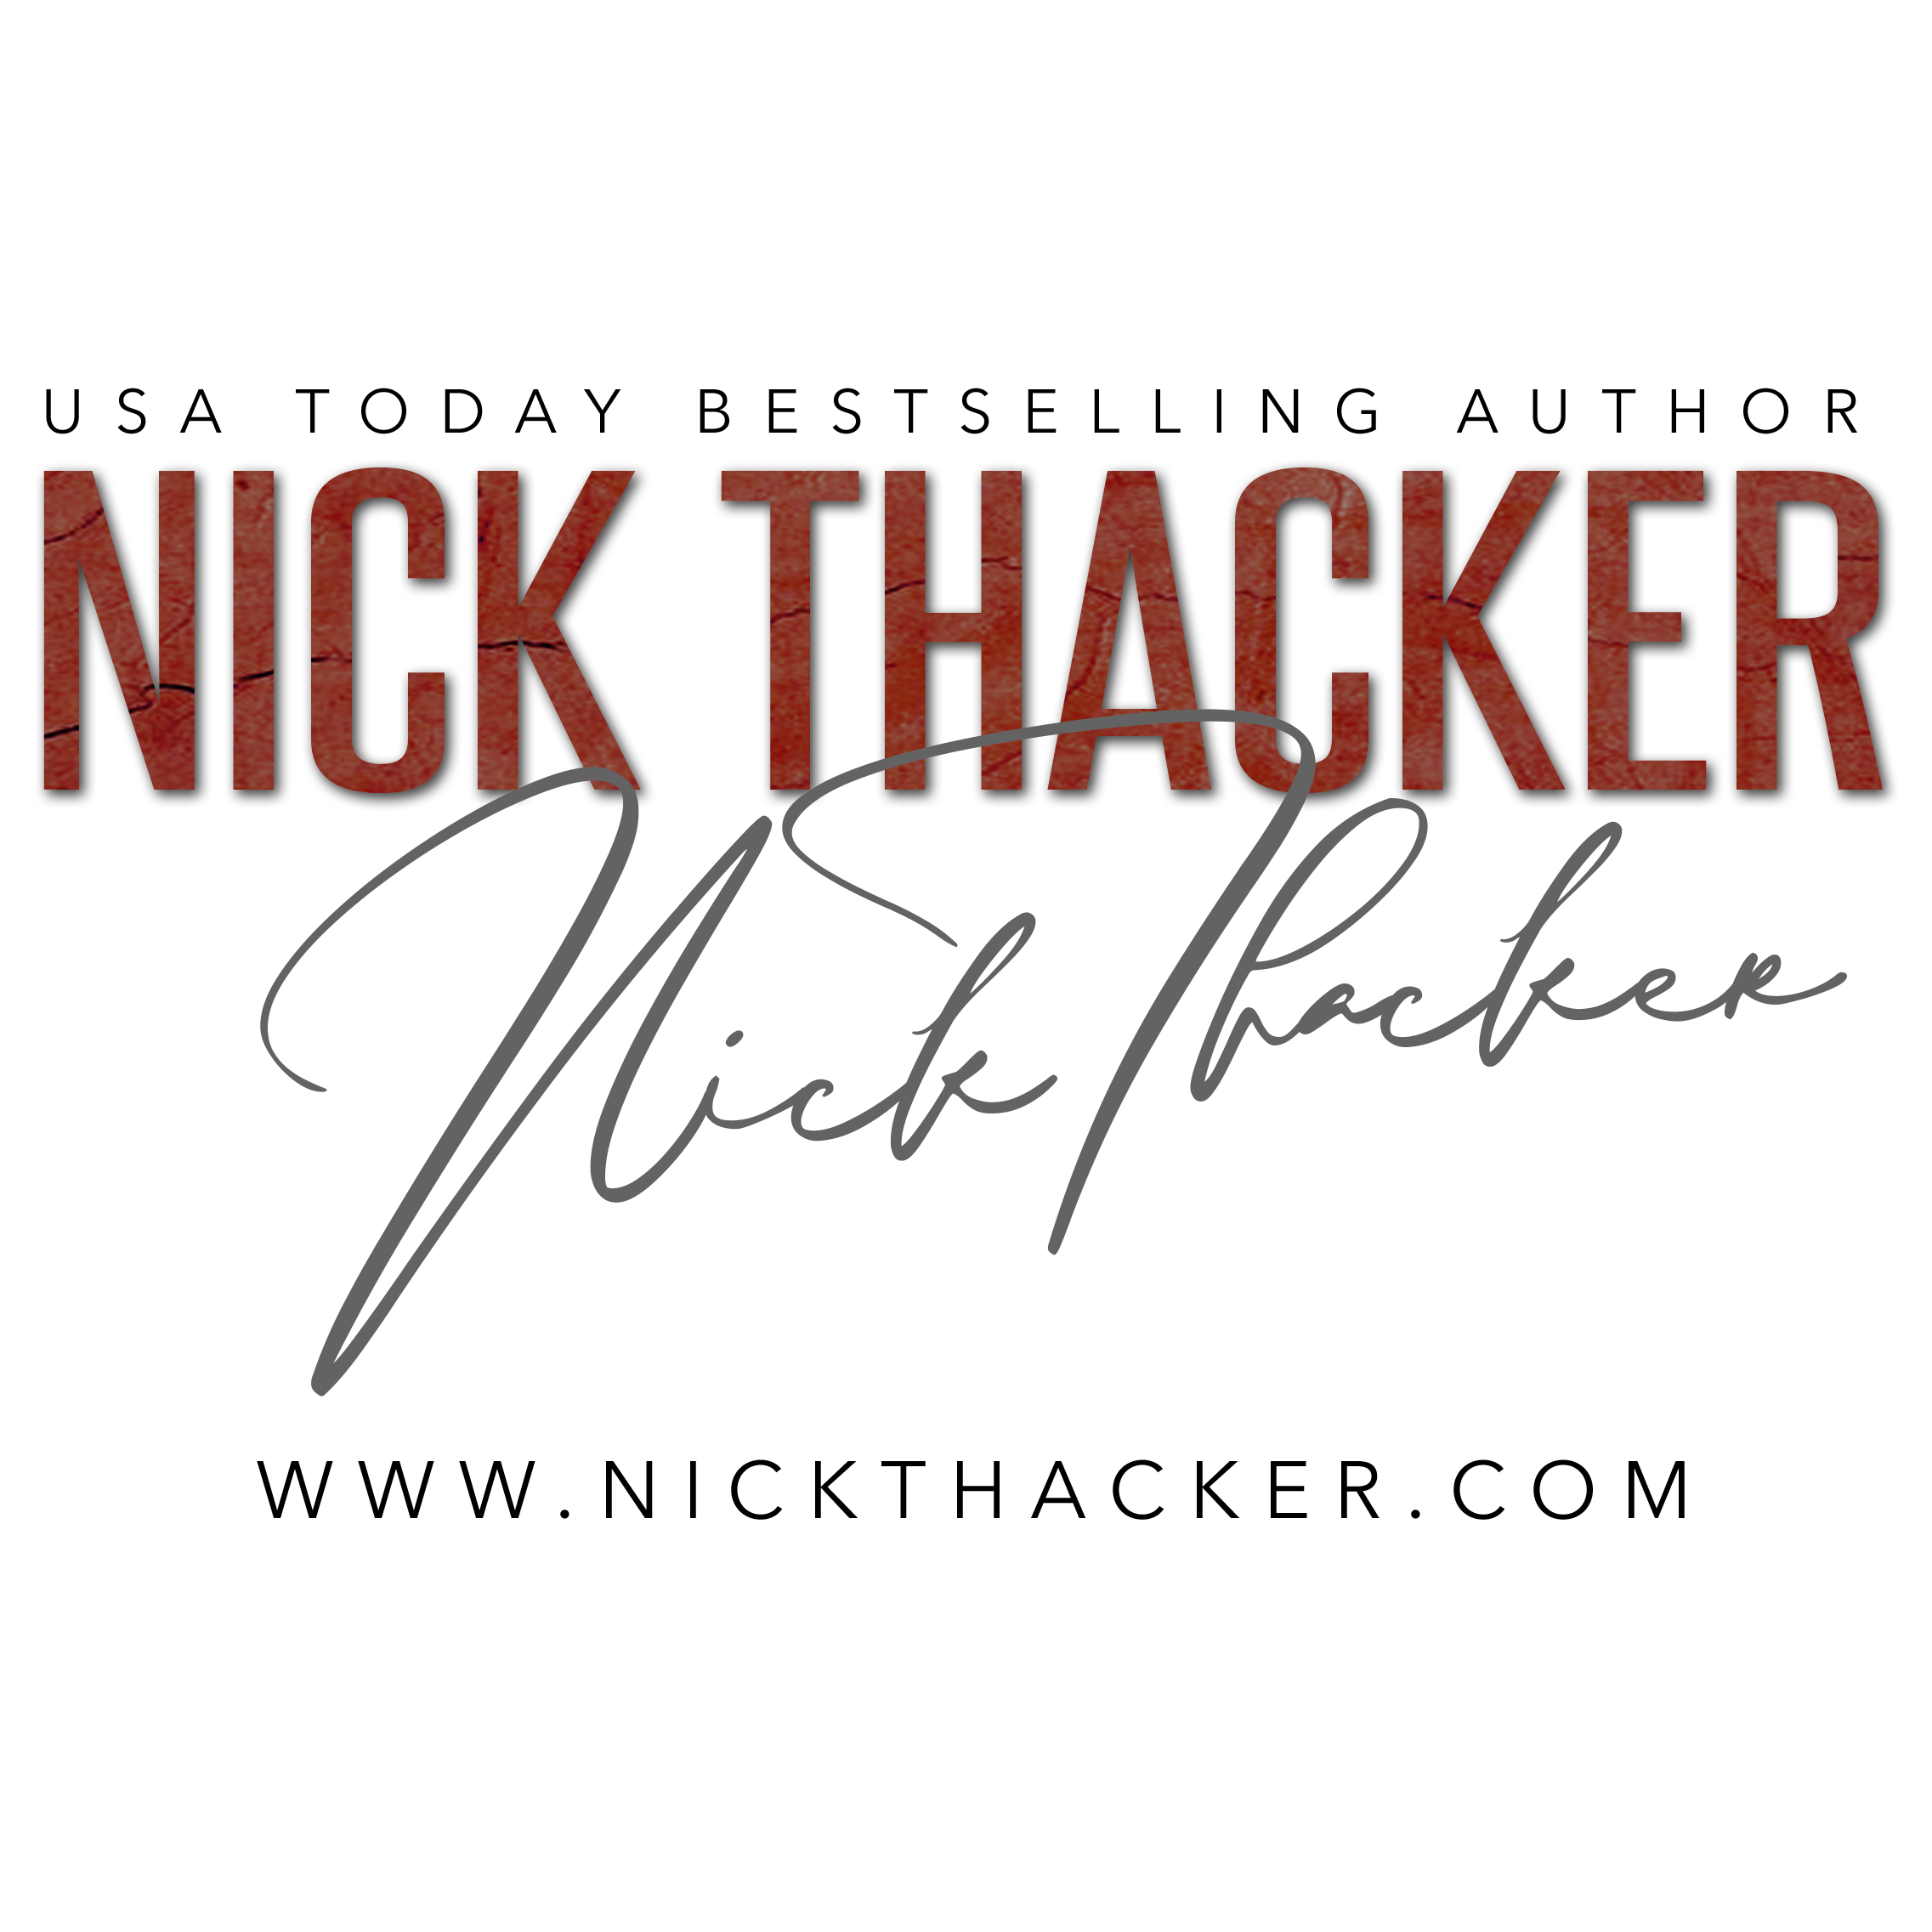 Nick Thacker - Action-Adventure Author